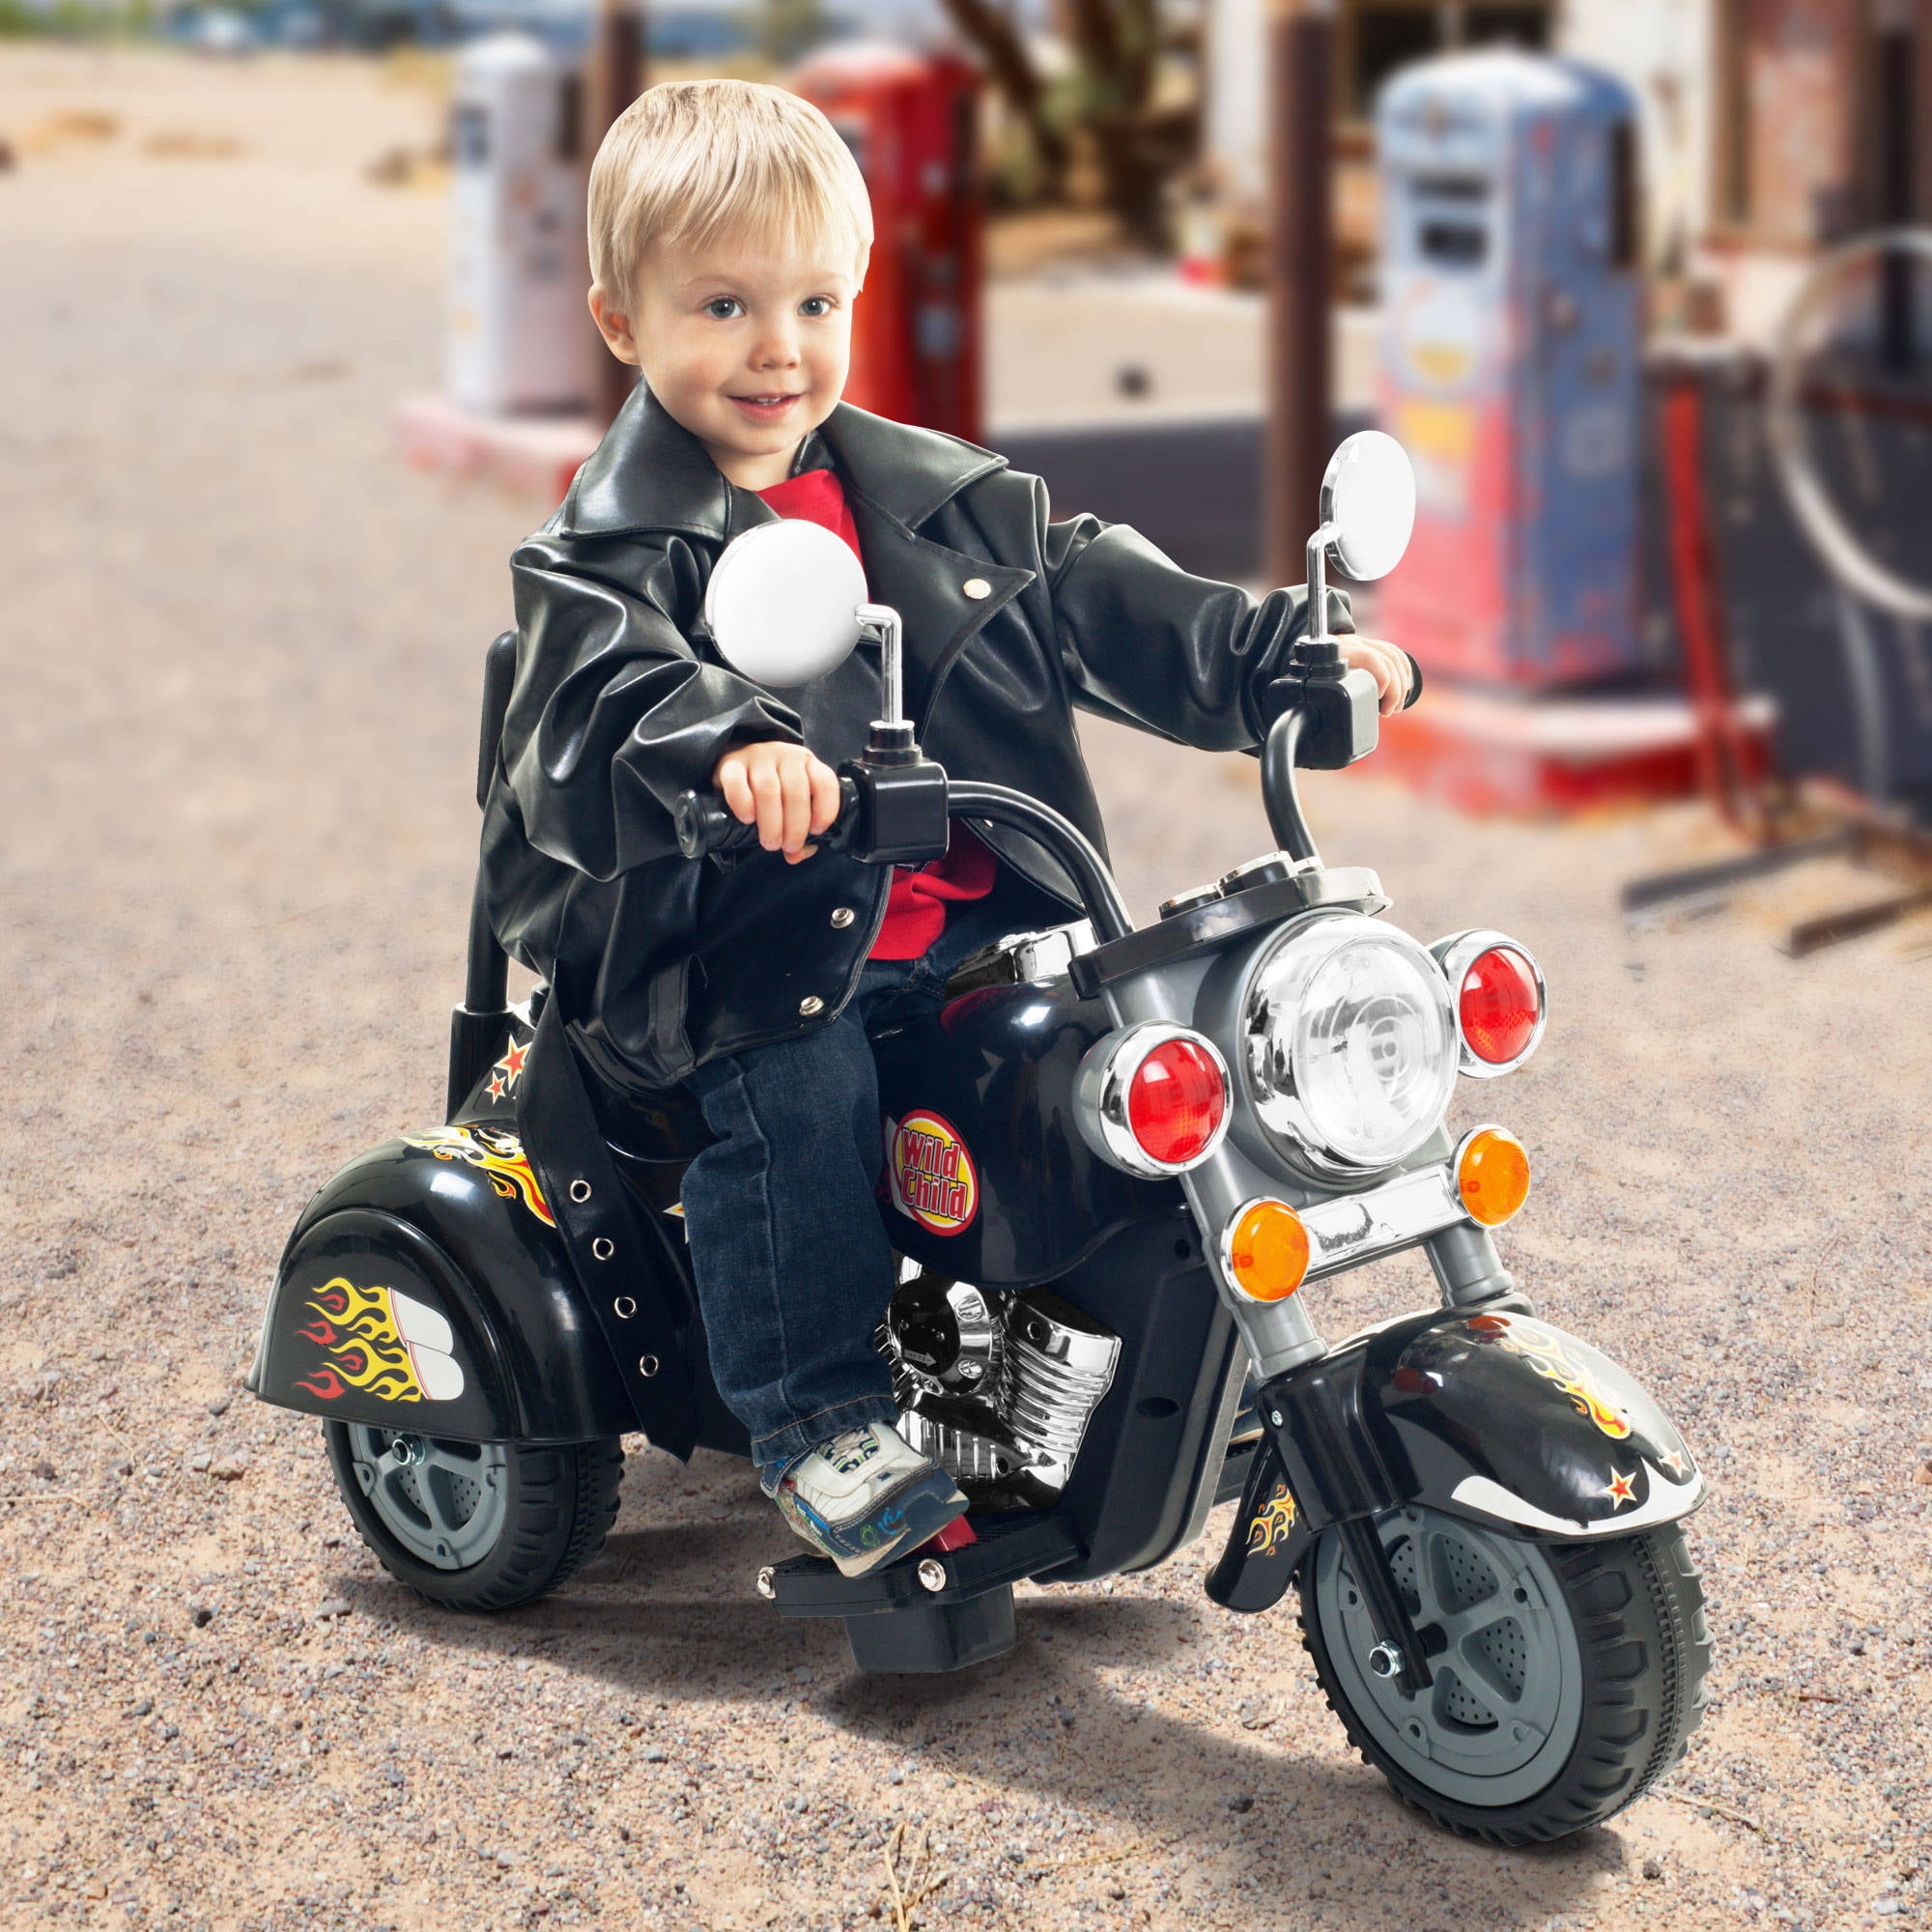 3 Wheel Trike Chopper Motorcycle Ride On Toy For Kids By Rockin